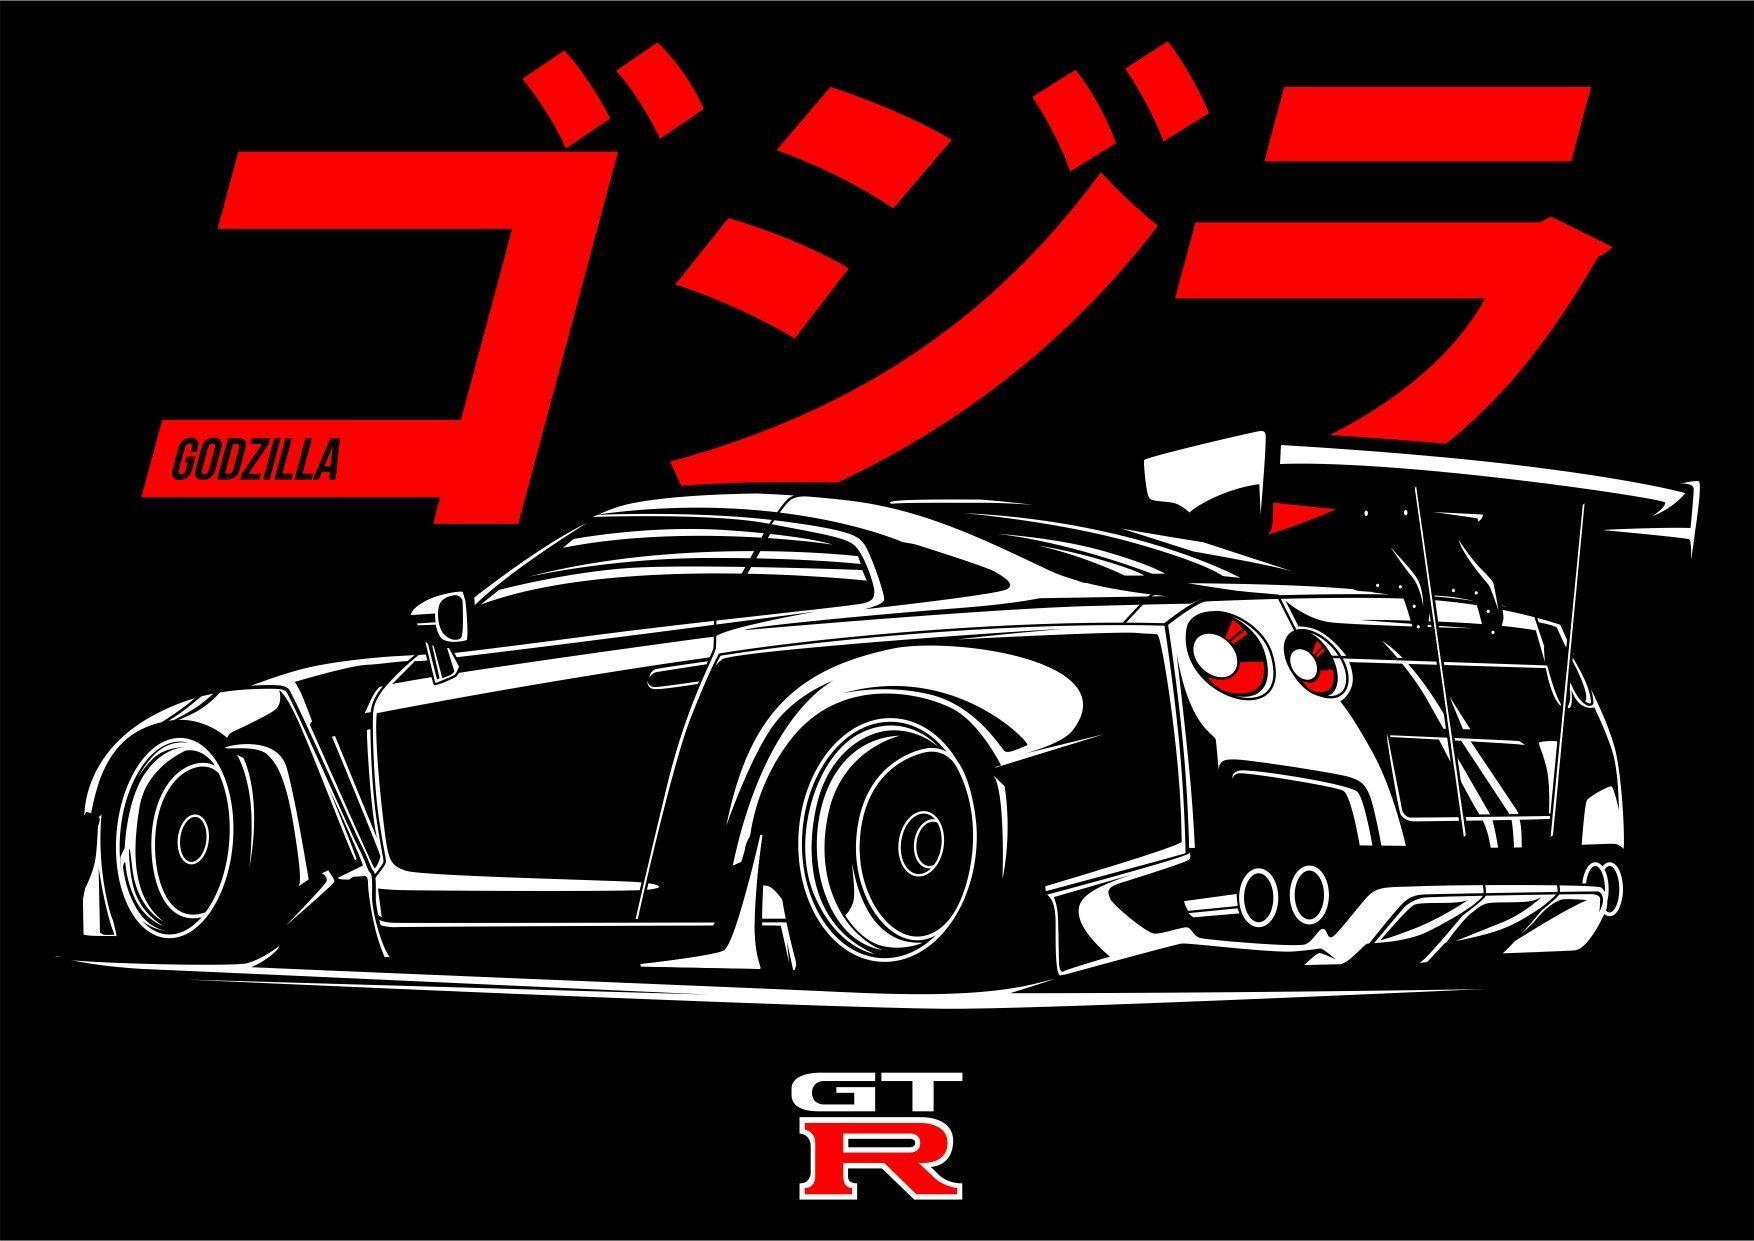 Godzilla GTR Logo - Godzilla GTR Rocket Bunny | Cars | Pinterest | Cars, Cars and ...